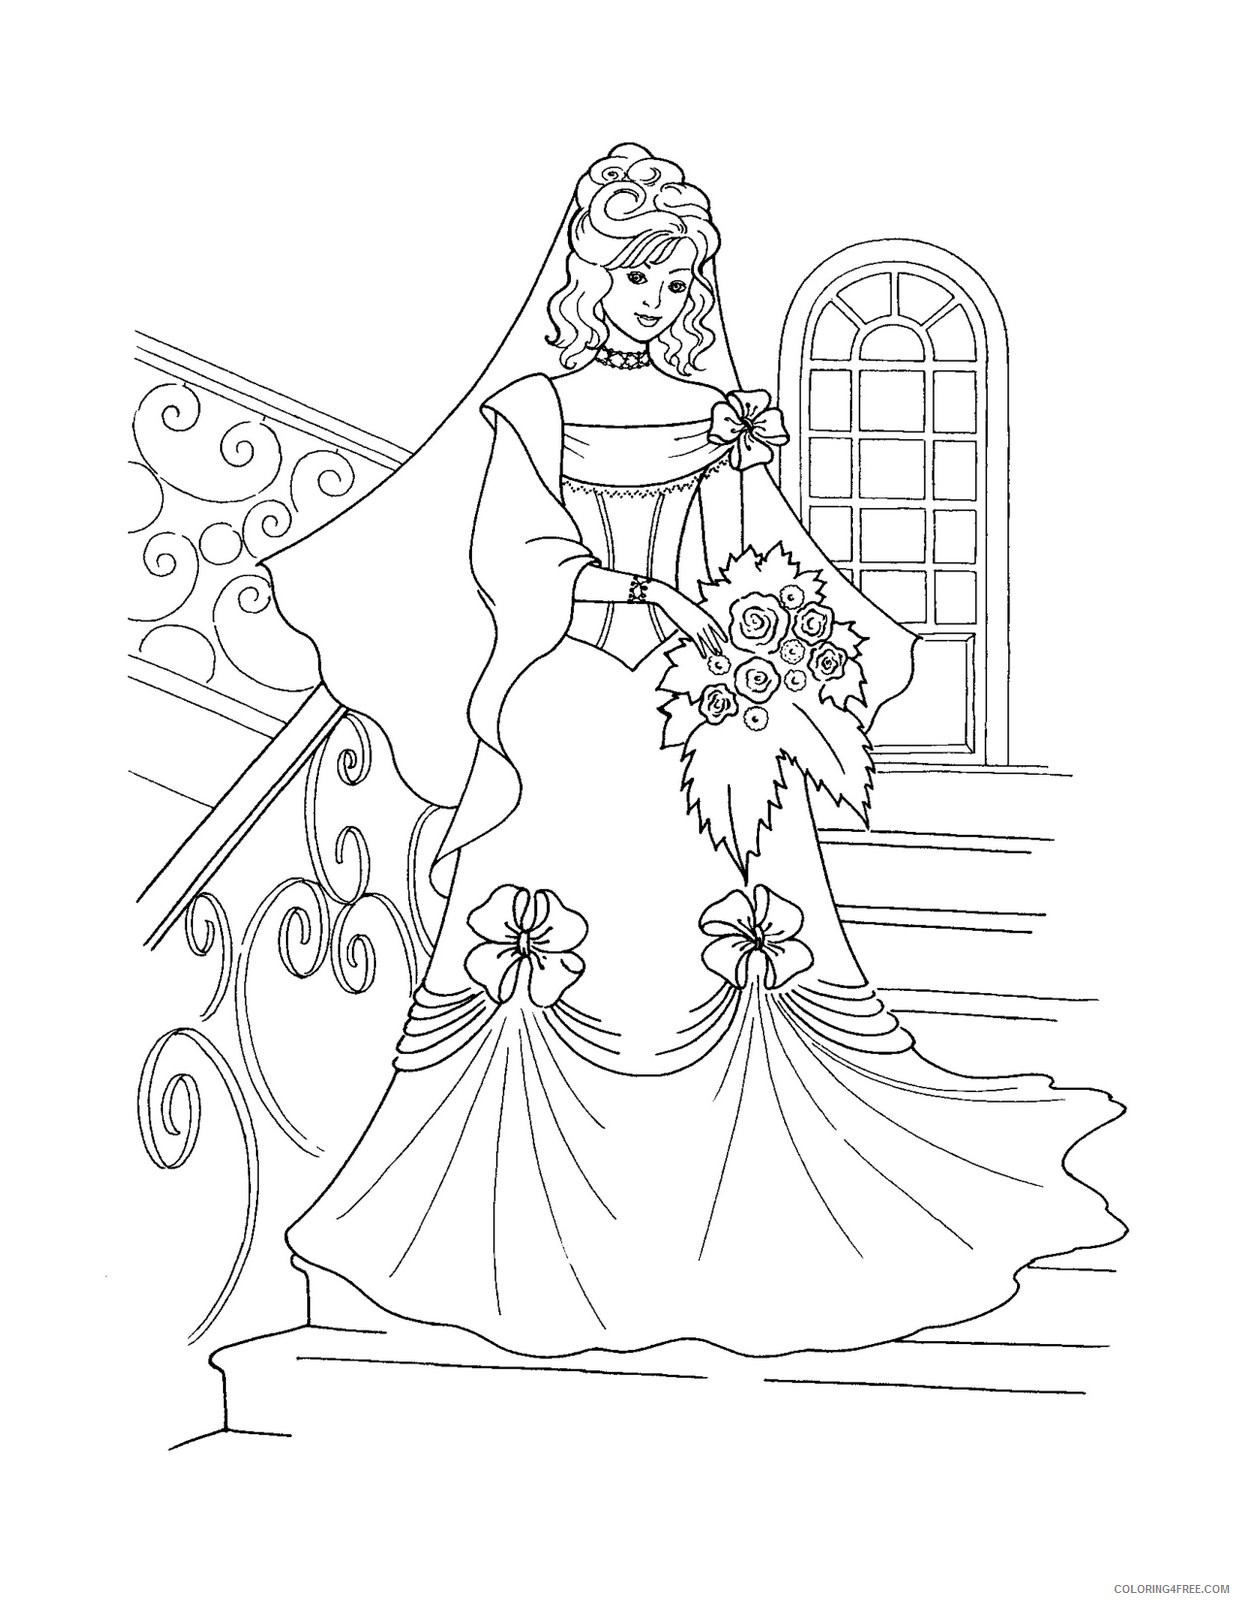 Disney Princess Coloring Pages Cartoons Disney Princess Castle Printable 2020 2377 Coloring4free